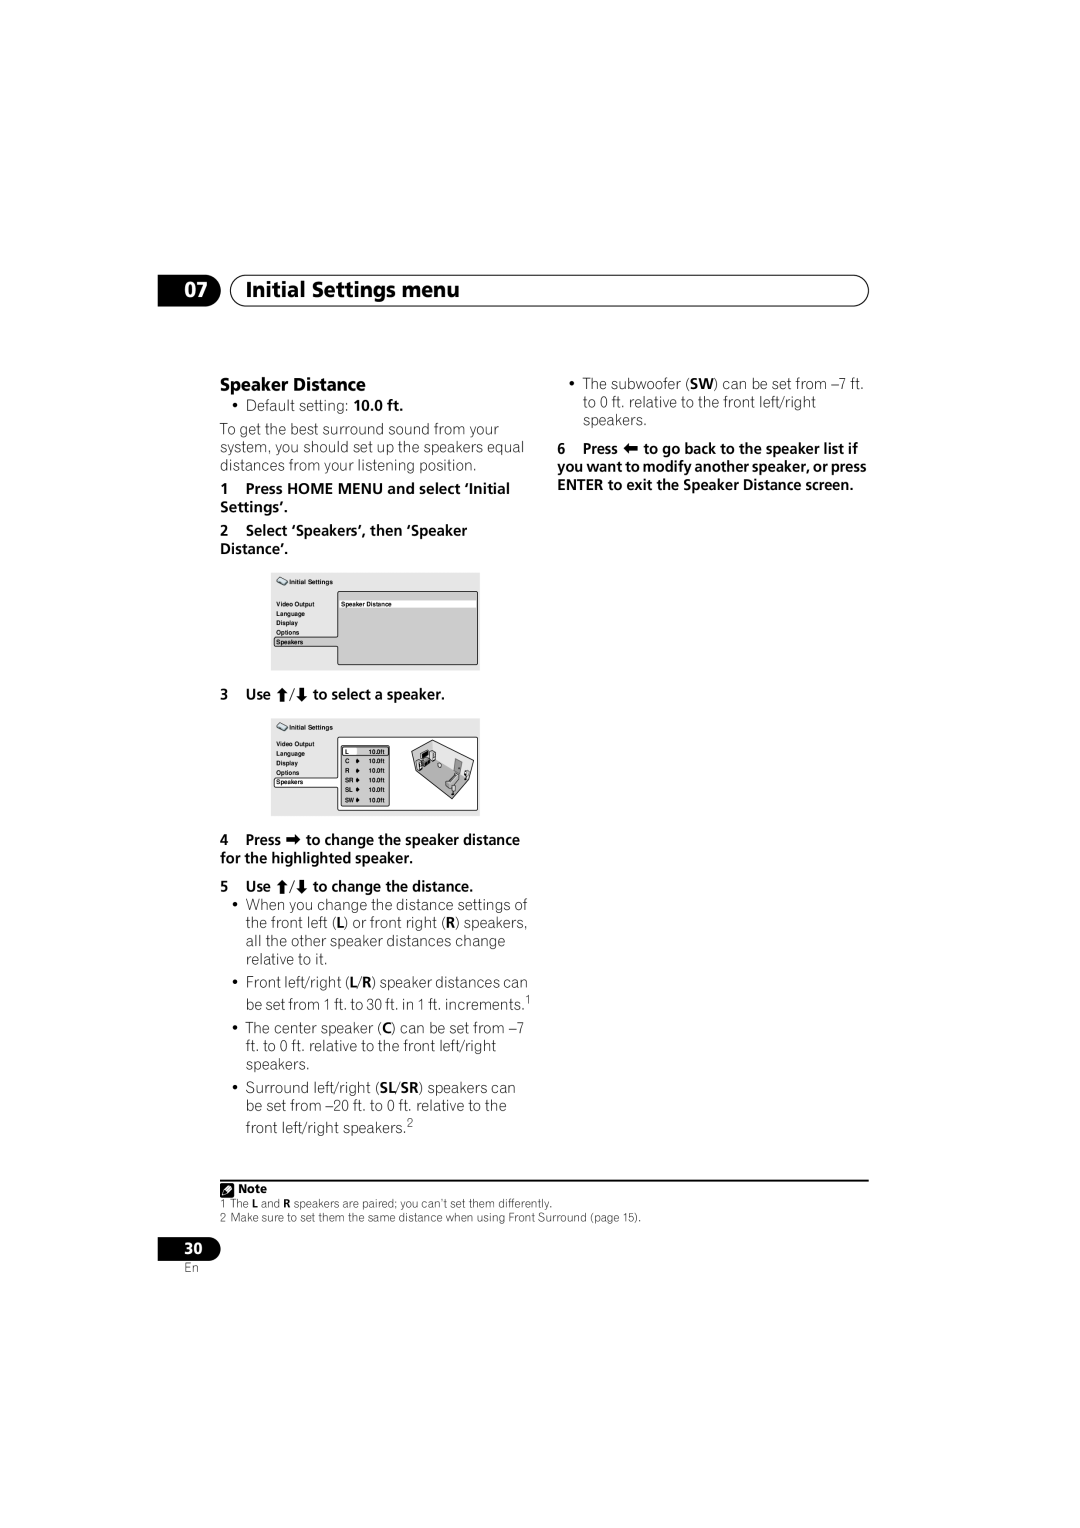 Pioneer HTZ-360DV manual 07Initial Settings menu, Speaker Distance 